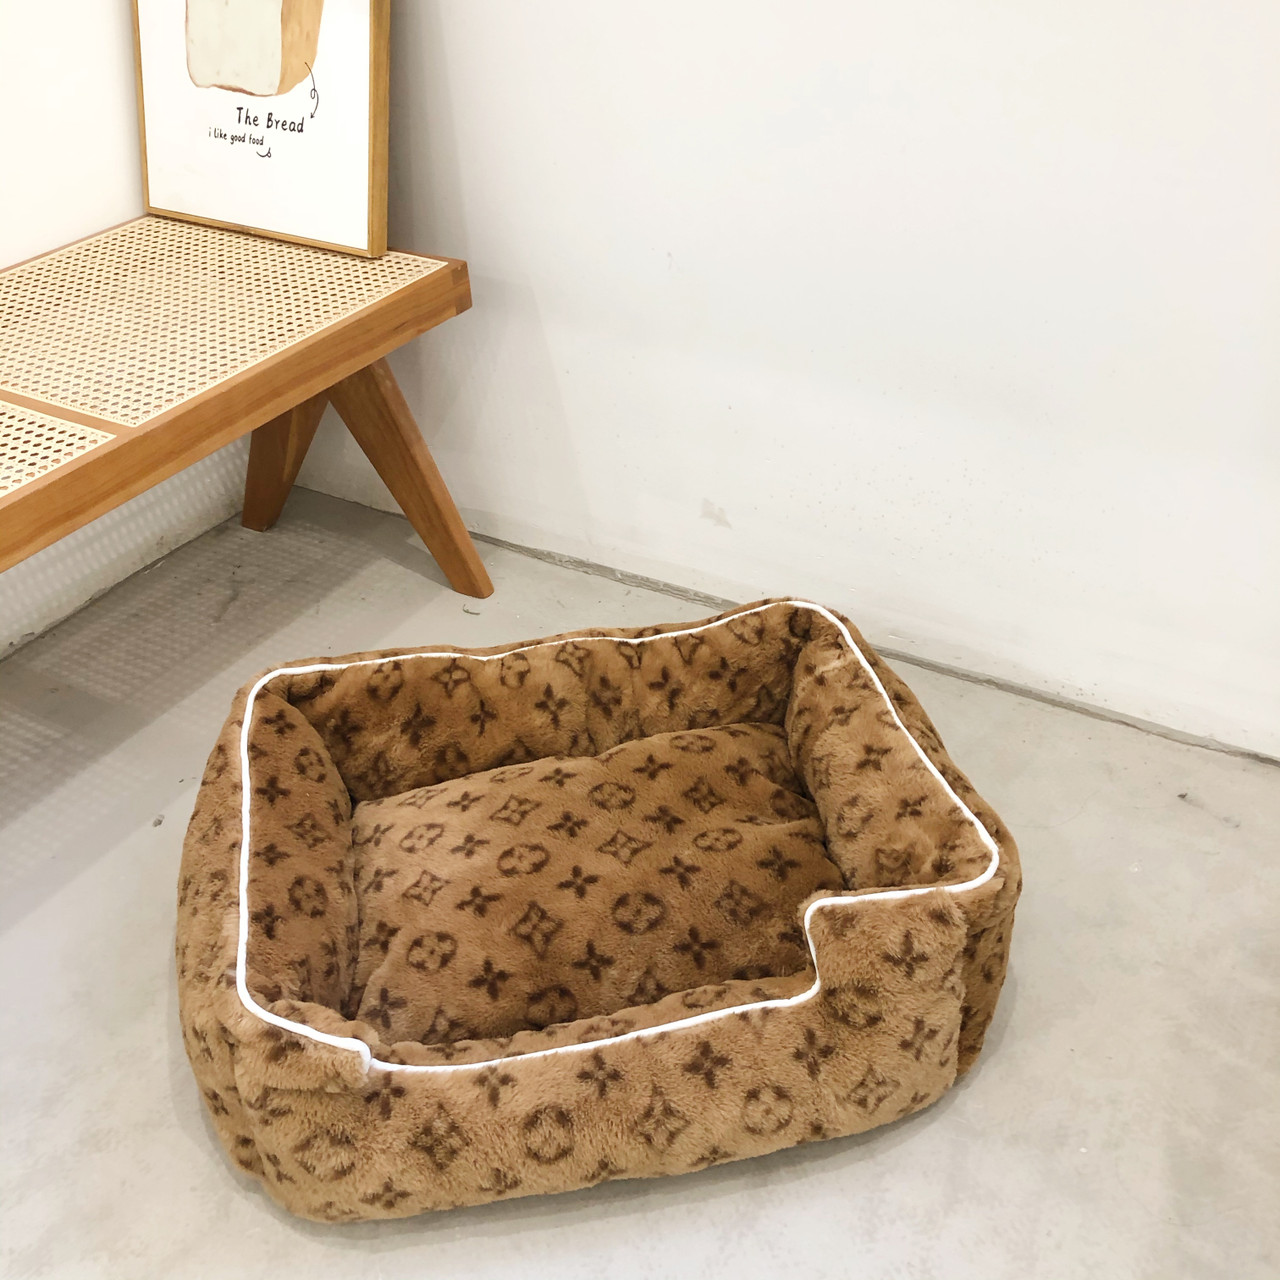 Brown Chewy Vuiton Dog Bed, Dog Diggin Designs at PupRwear